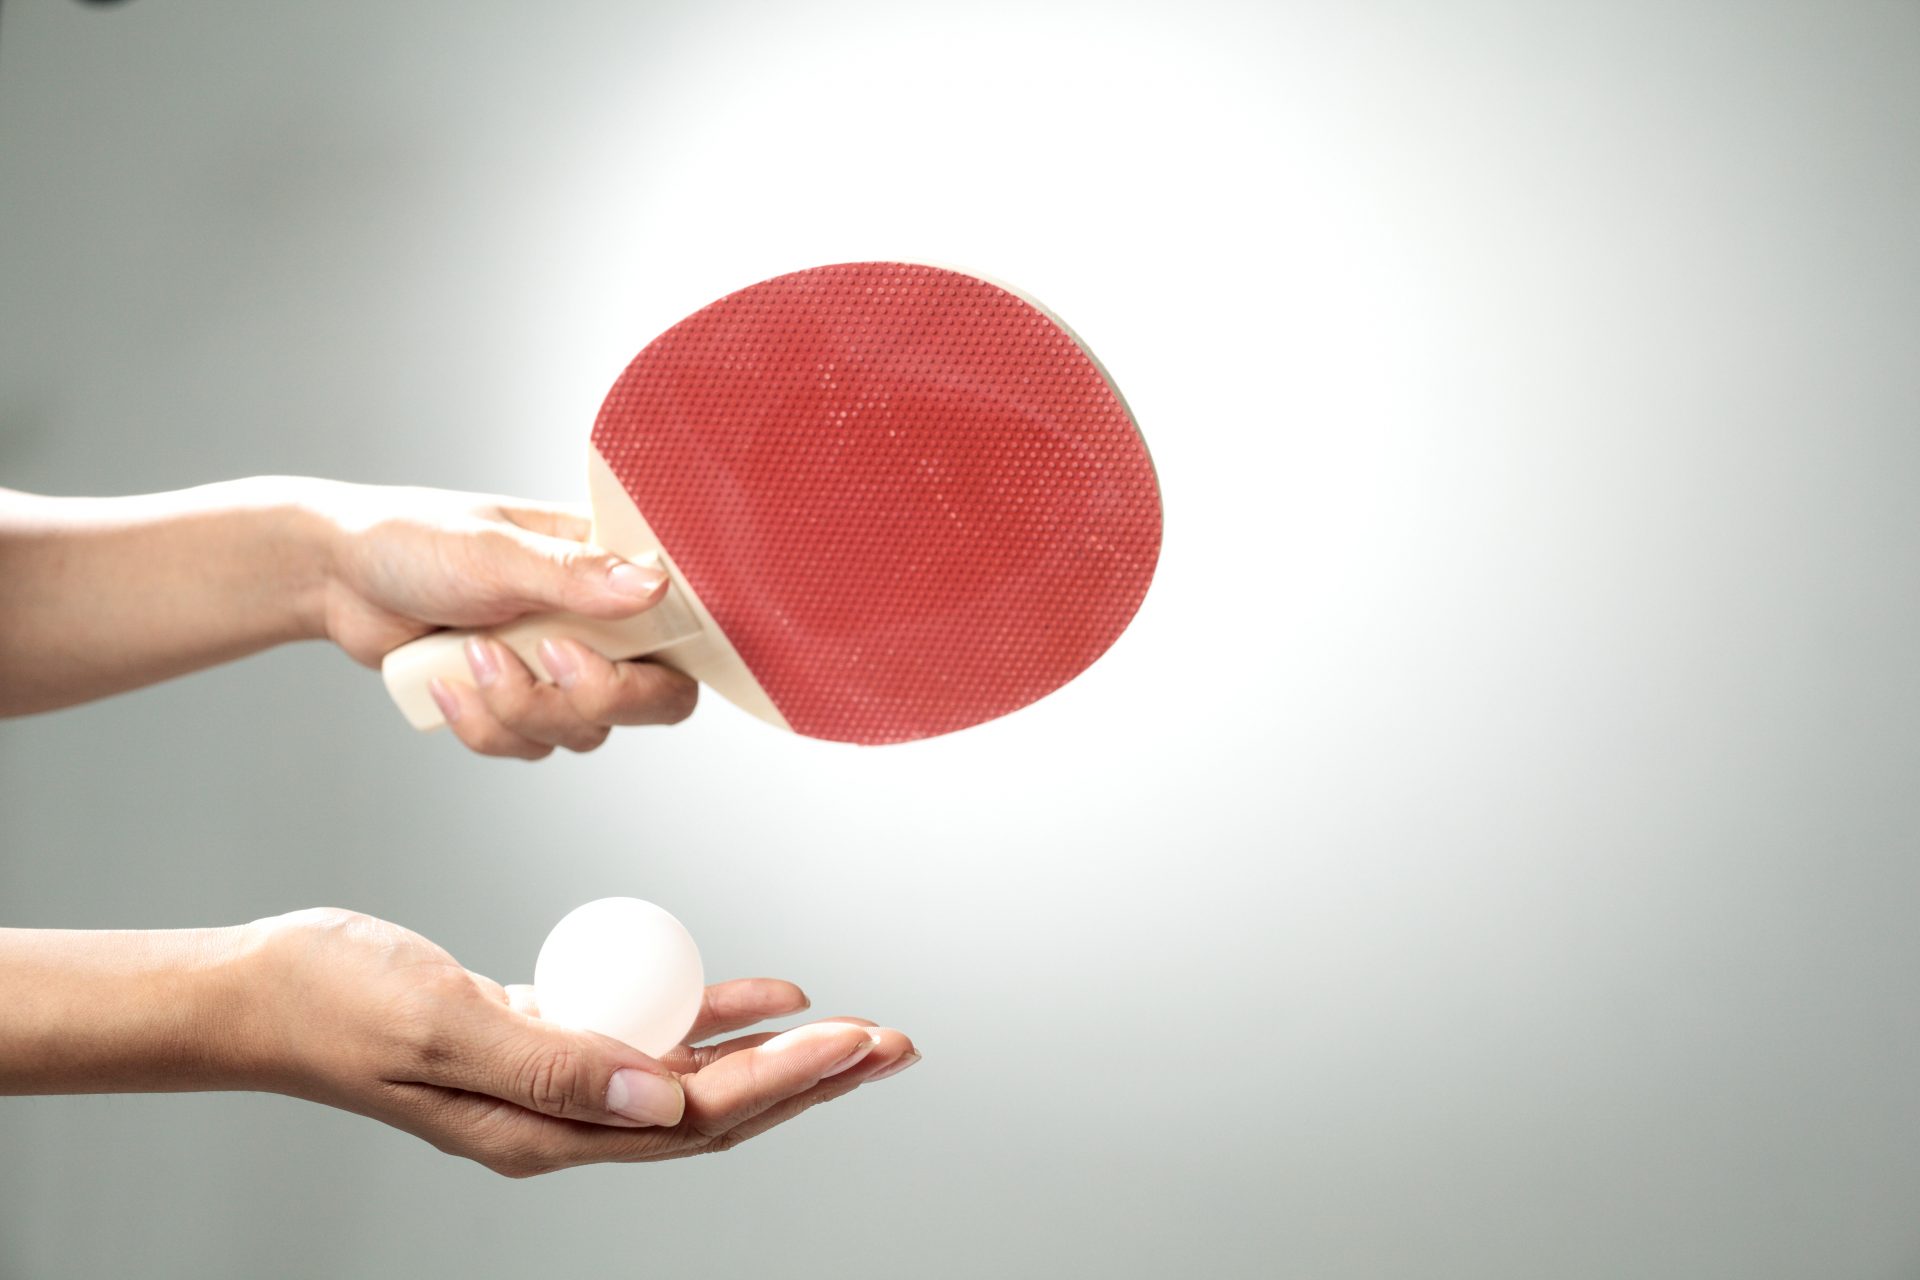 Table tennis, badminton, tennis are easier for lefties